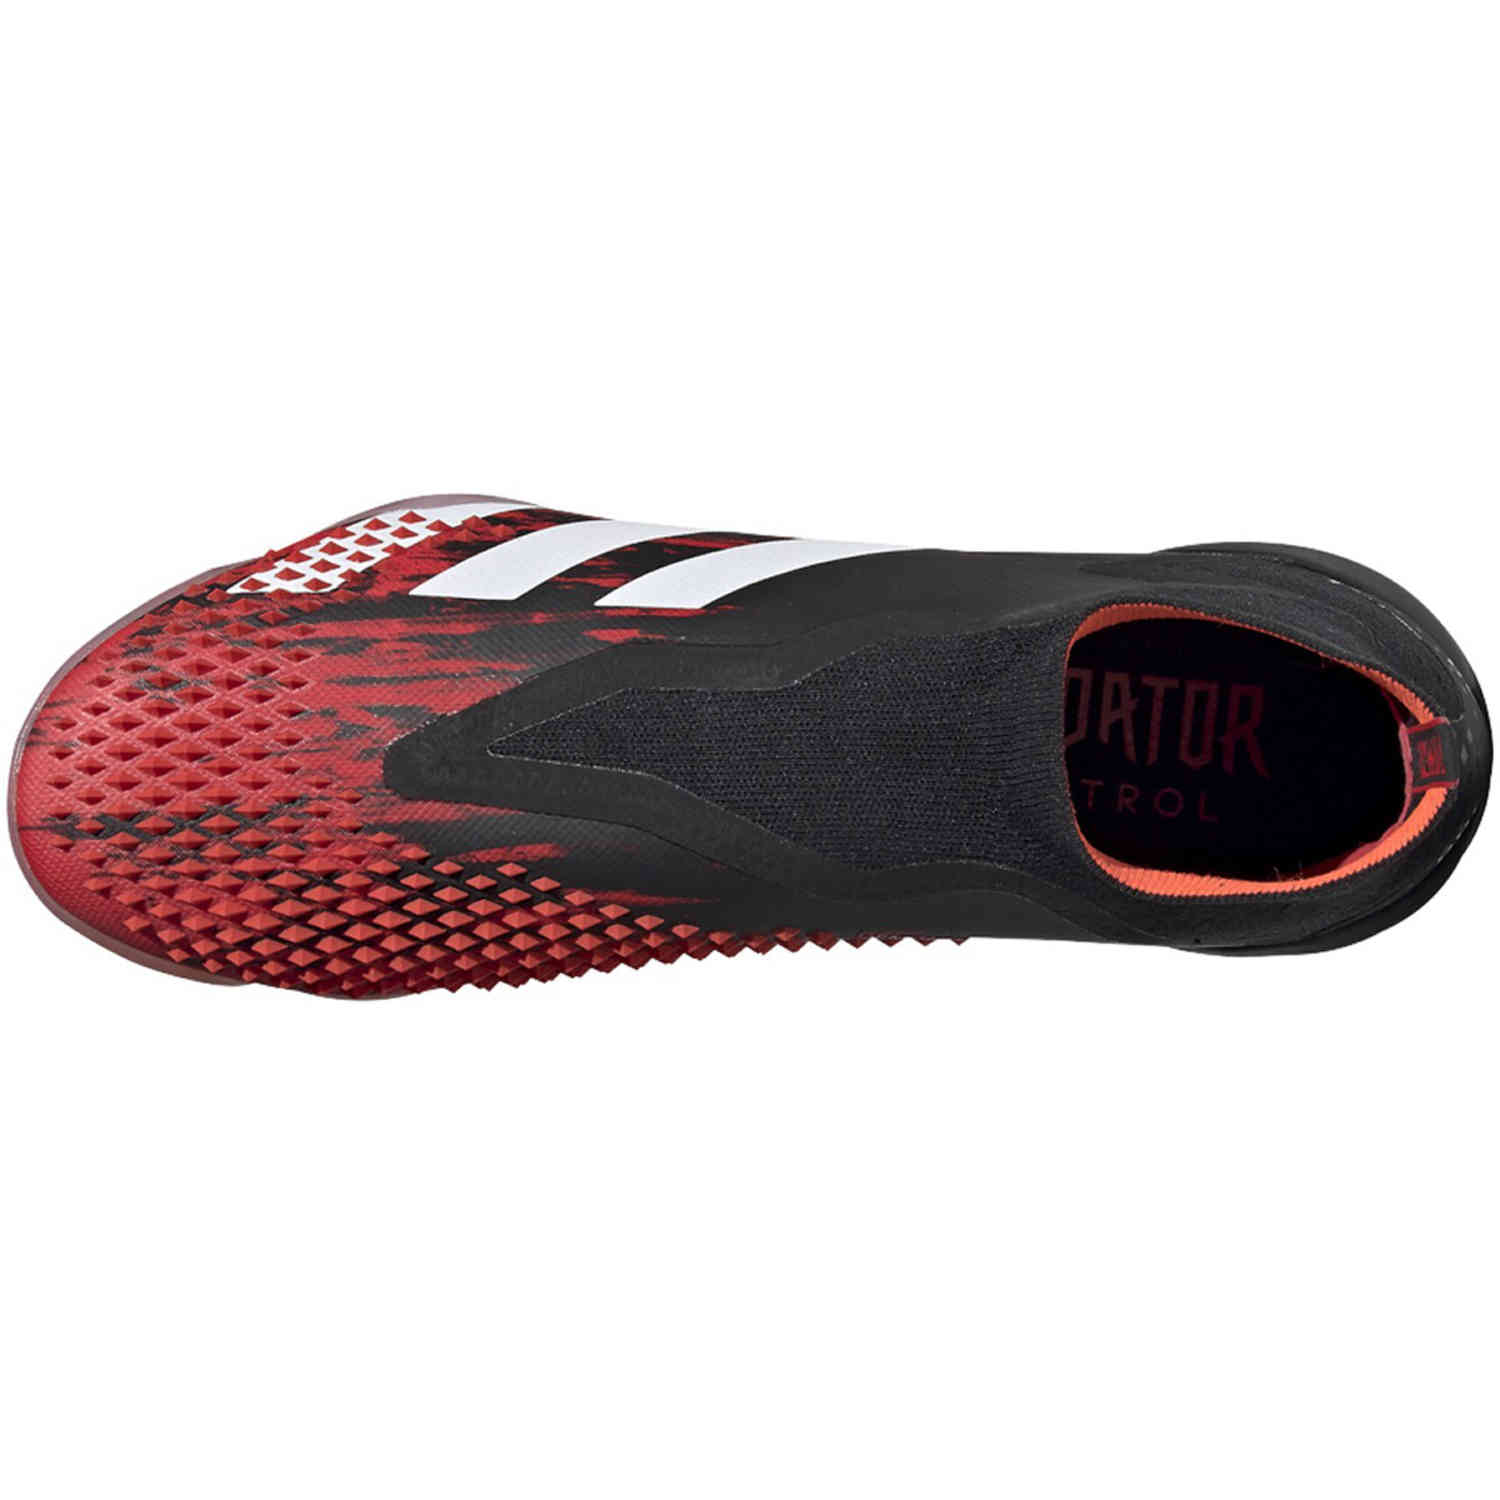 adidas Predator Athletic Shoes Size 10.5 for Men eBay